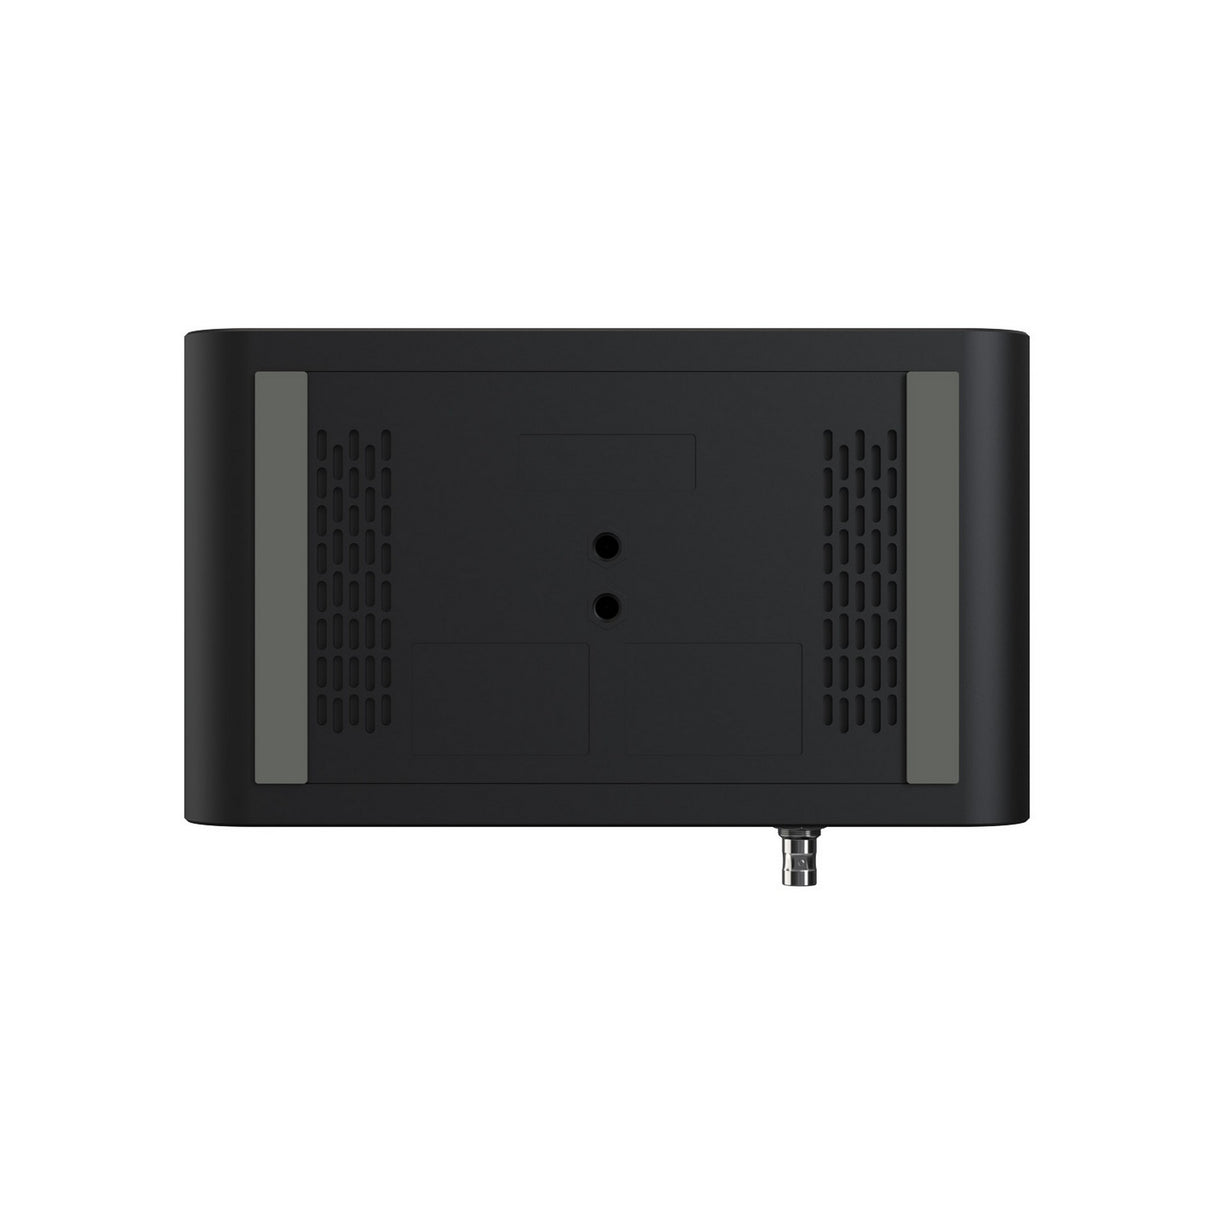 BZBGEAR ADAMO 20X 1080P FHD Auto Tracking HDMI 2.0/12G-SDI/USB 2.0/USB 3.0 Dante AV-H Live Streaming PTZ Camera